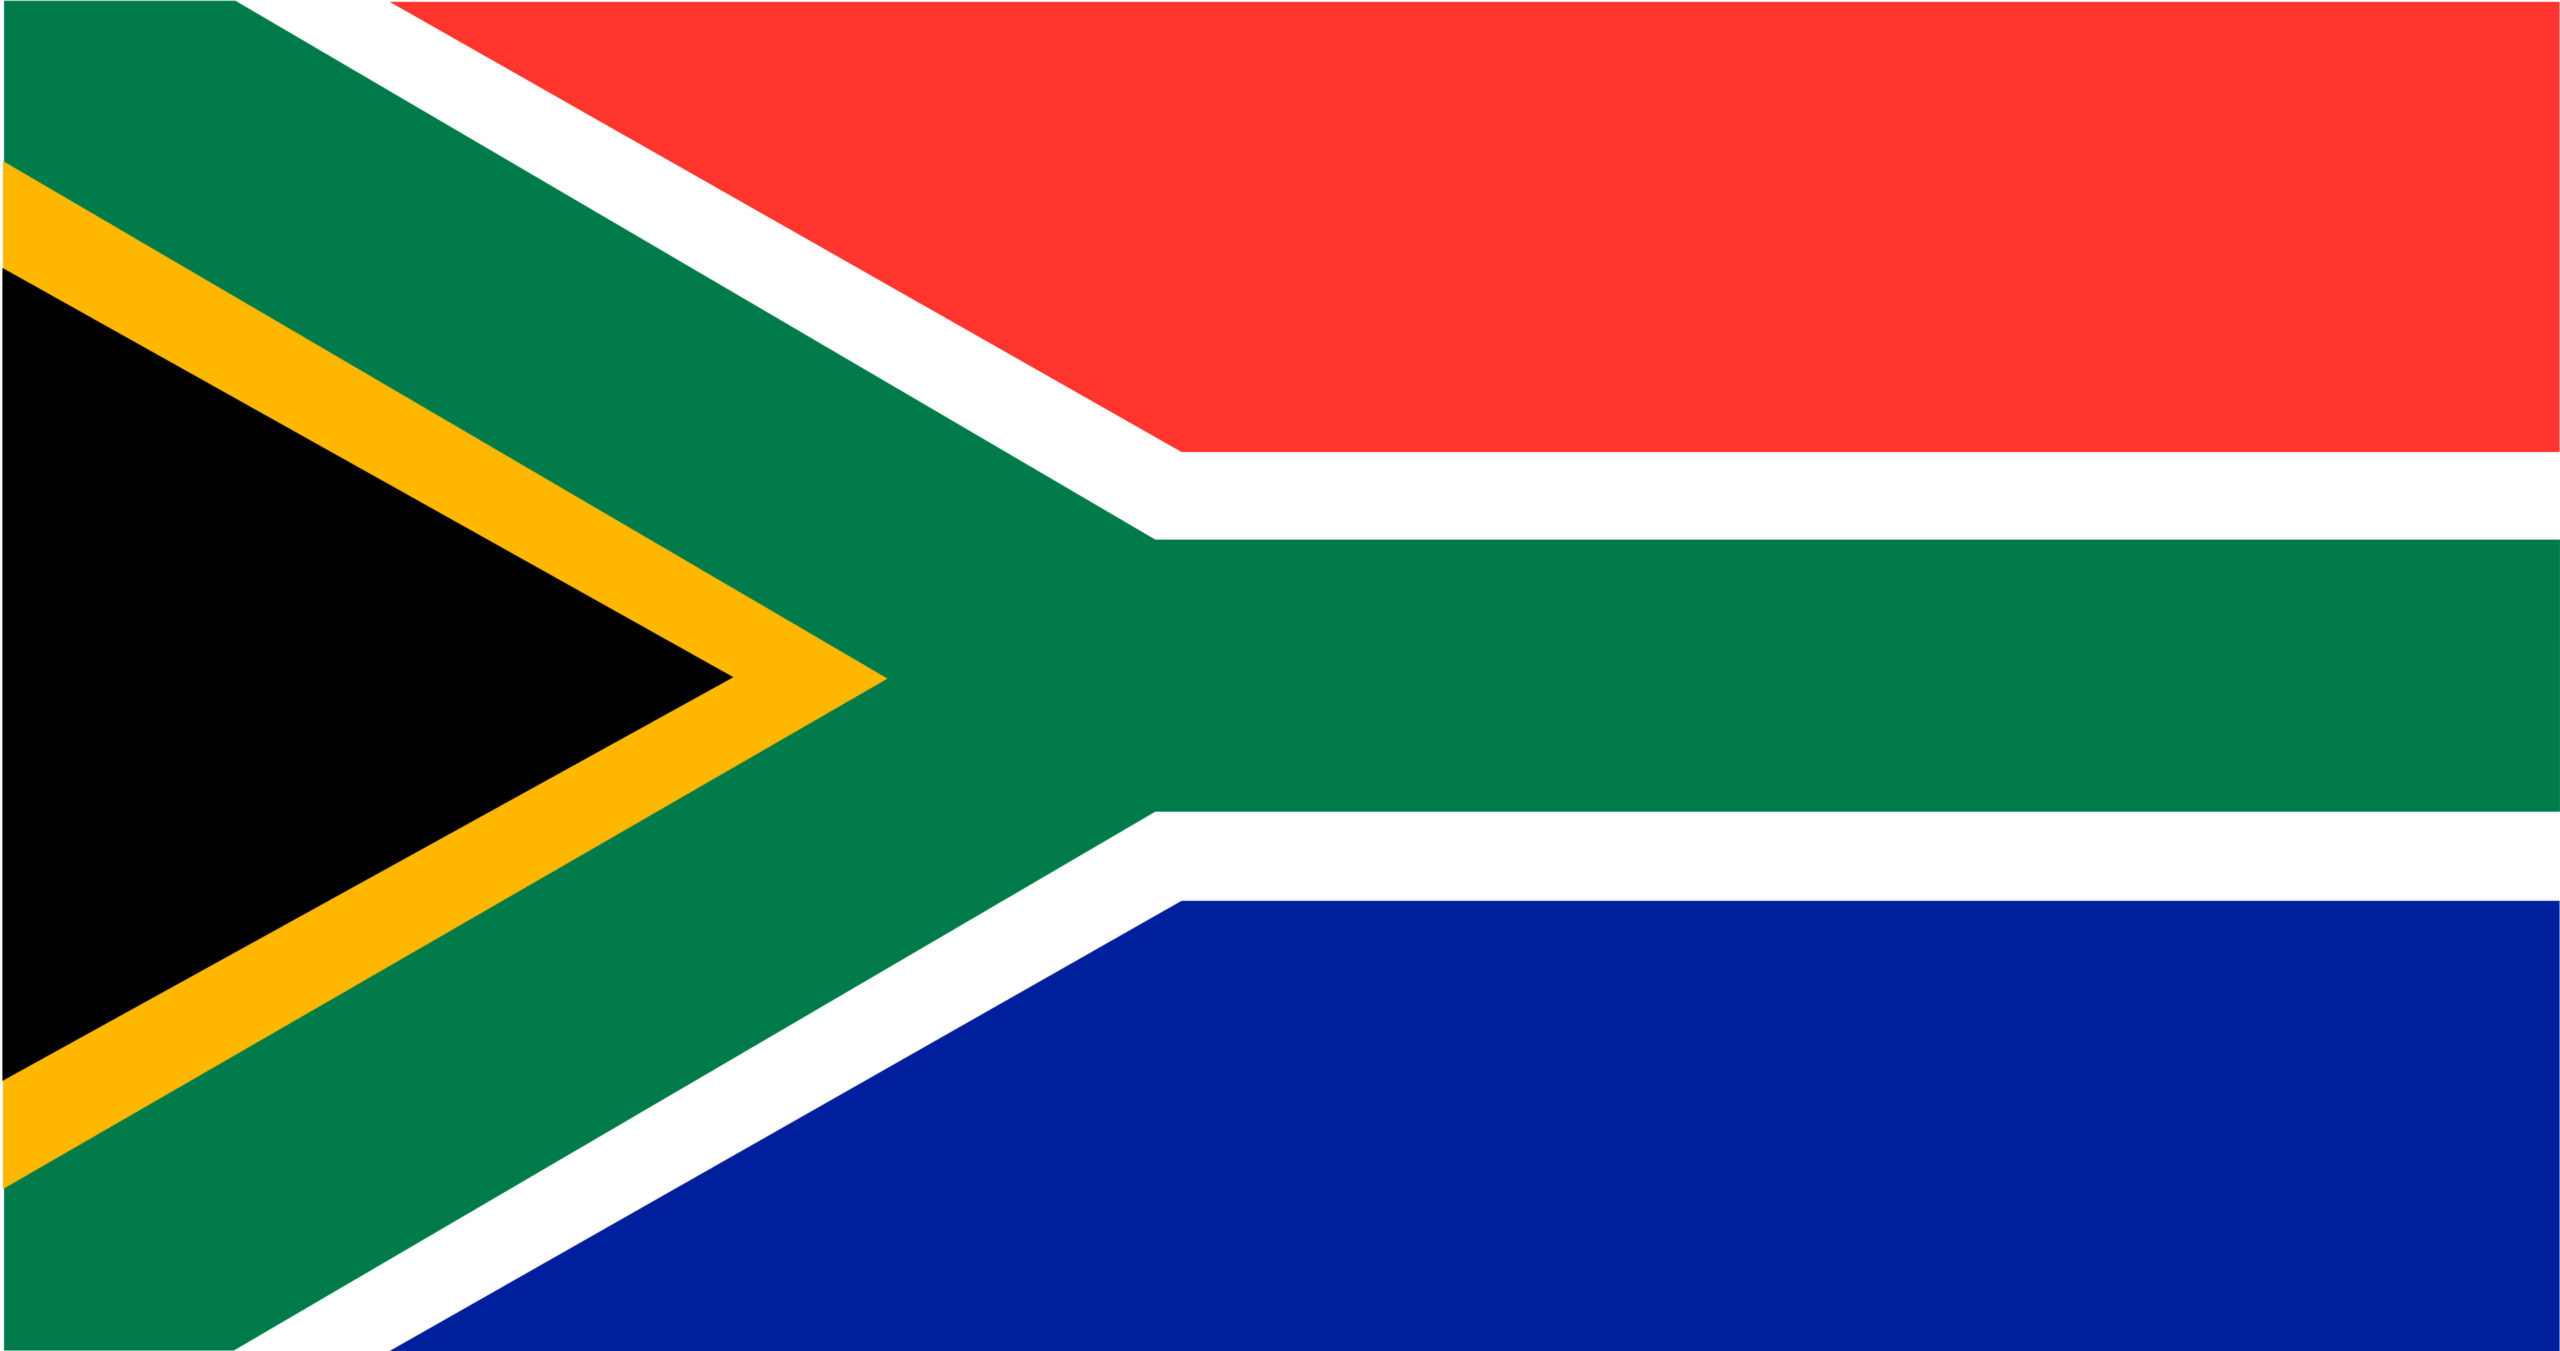 Bandiera Sud Africa